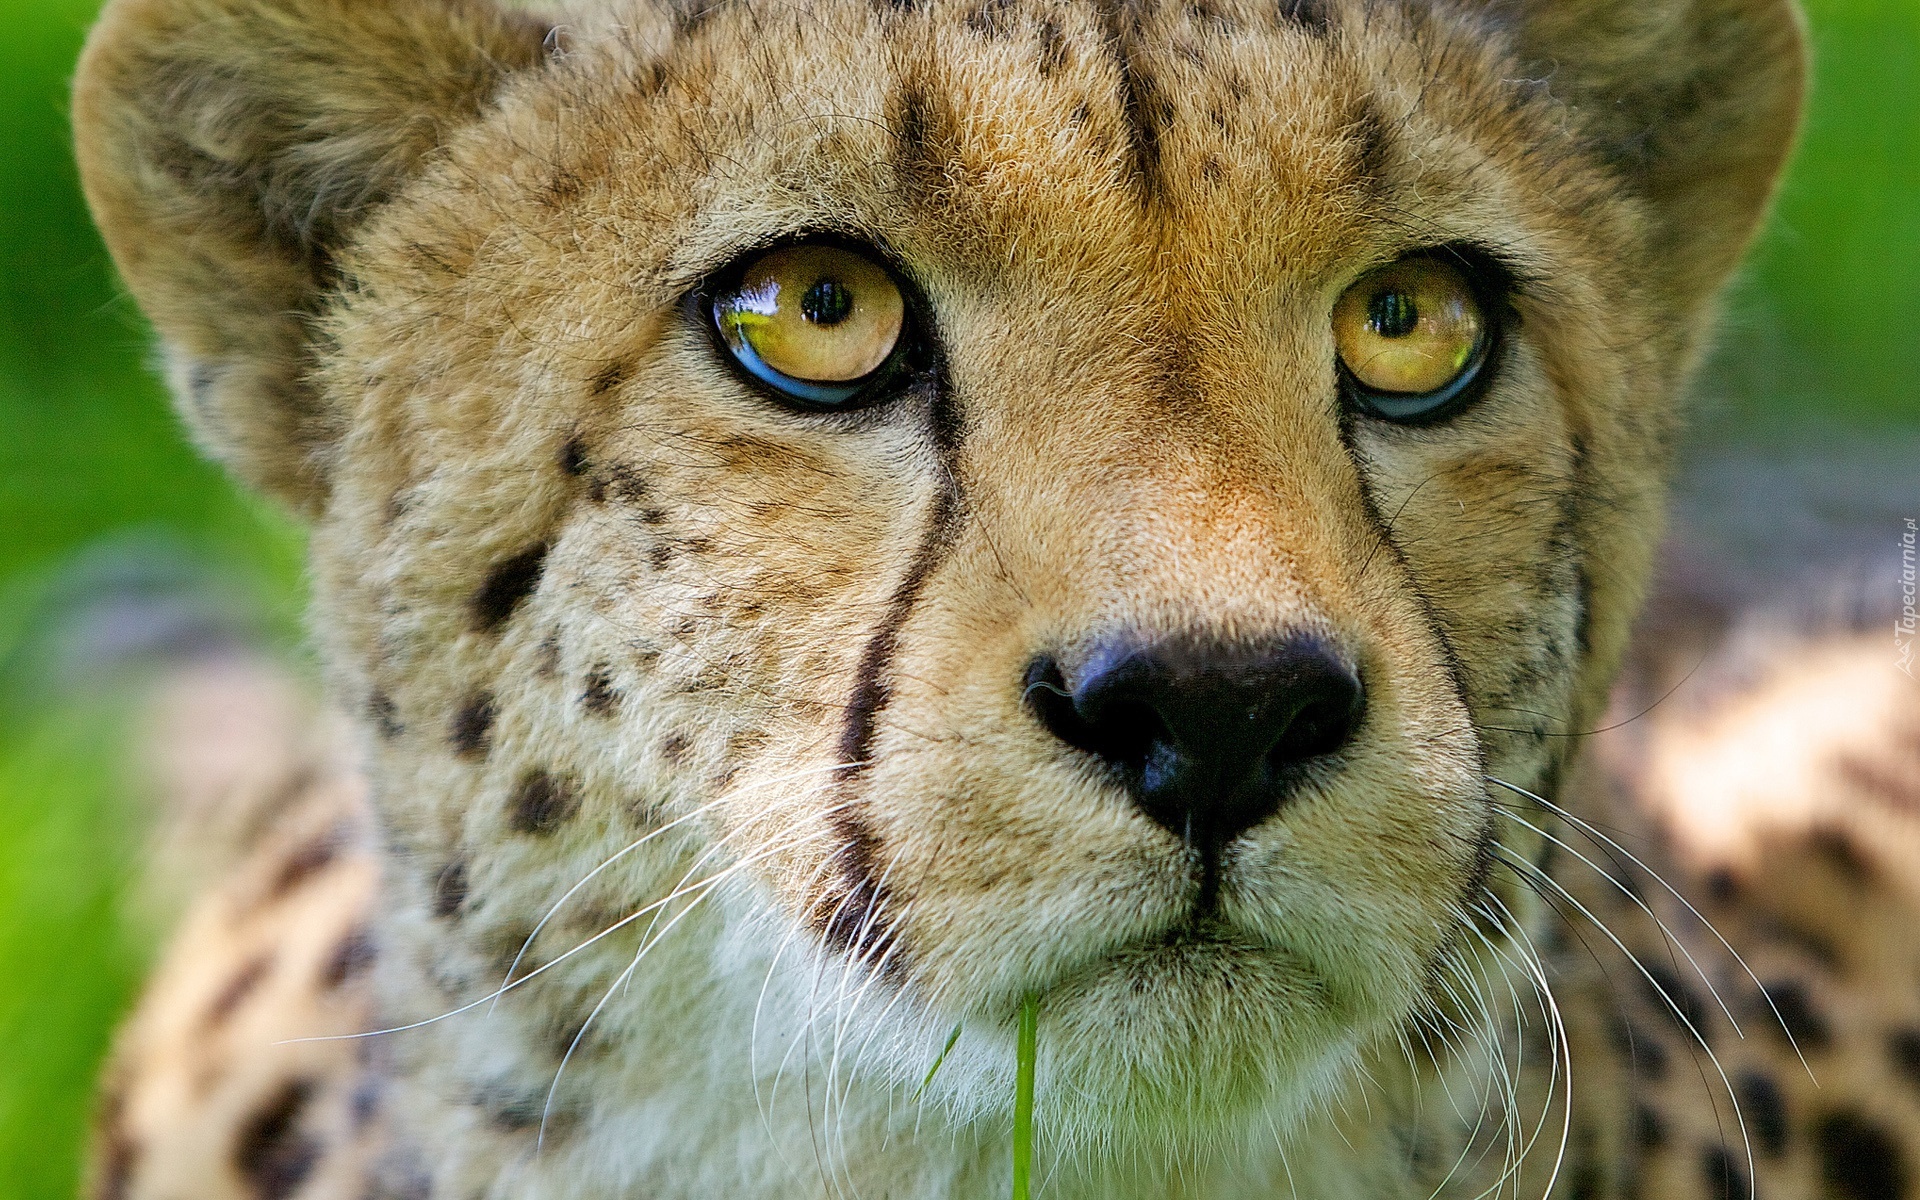 Gepard, Portret